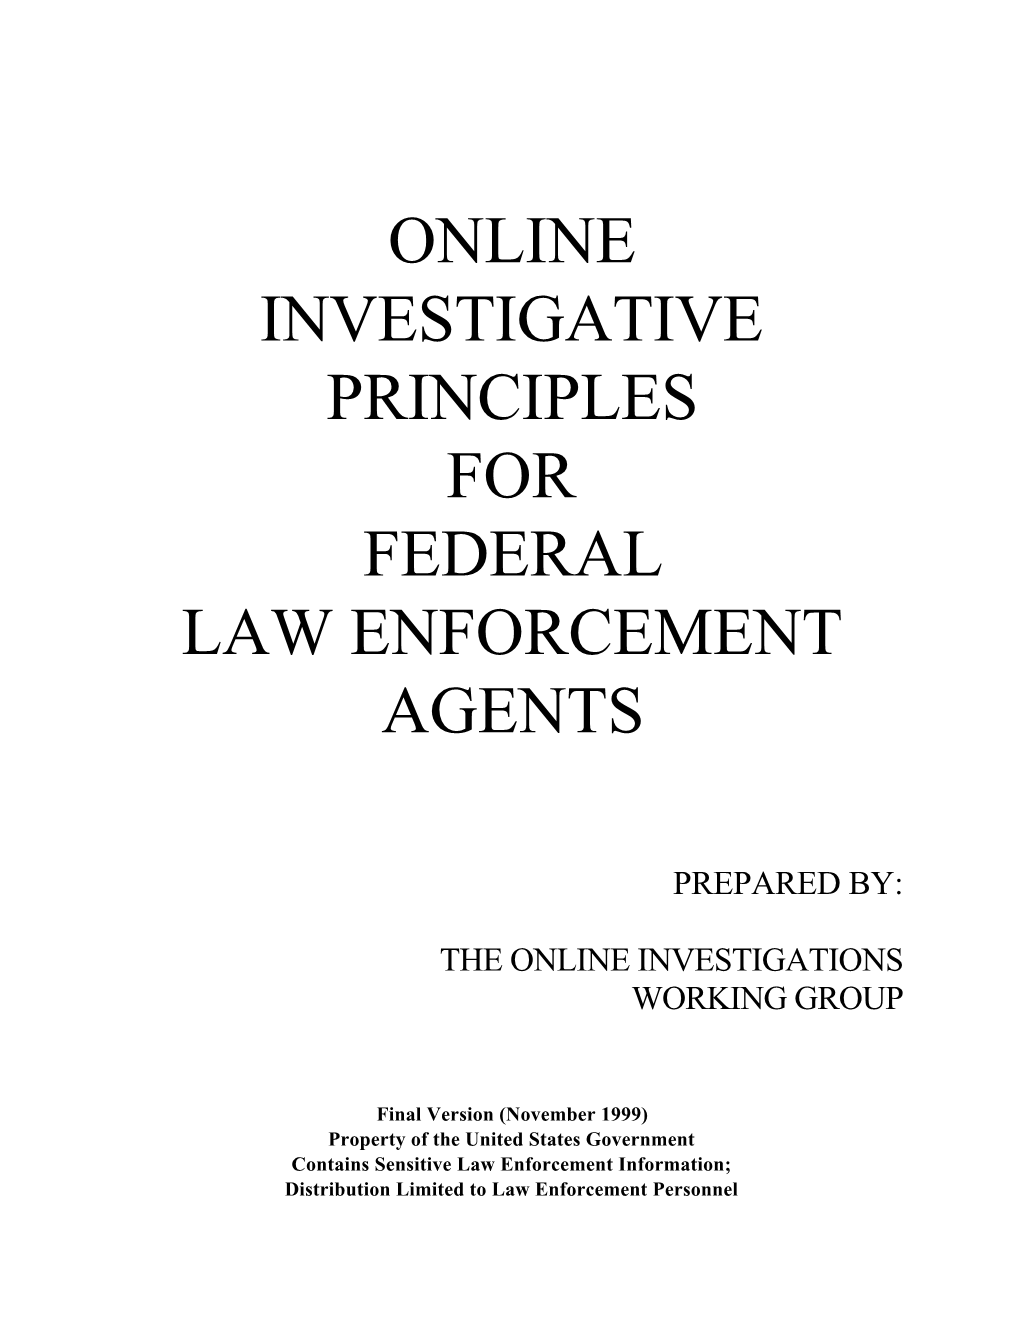 Online Investigative Principles for Federal Law Enforcement Agents